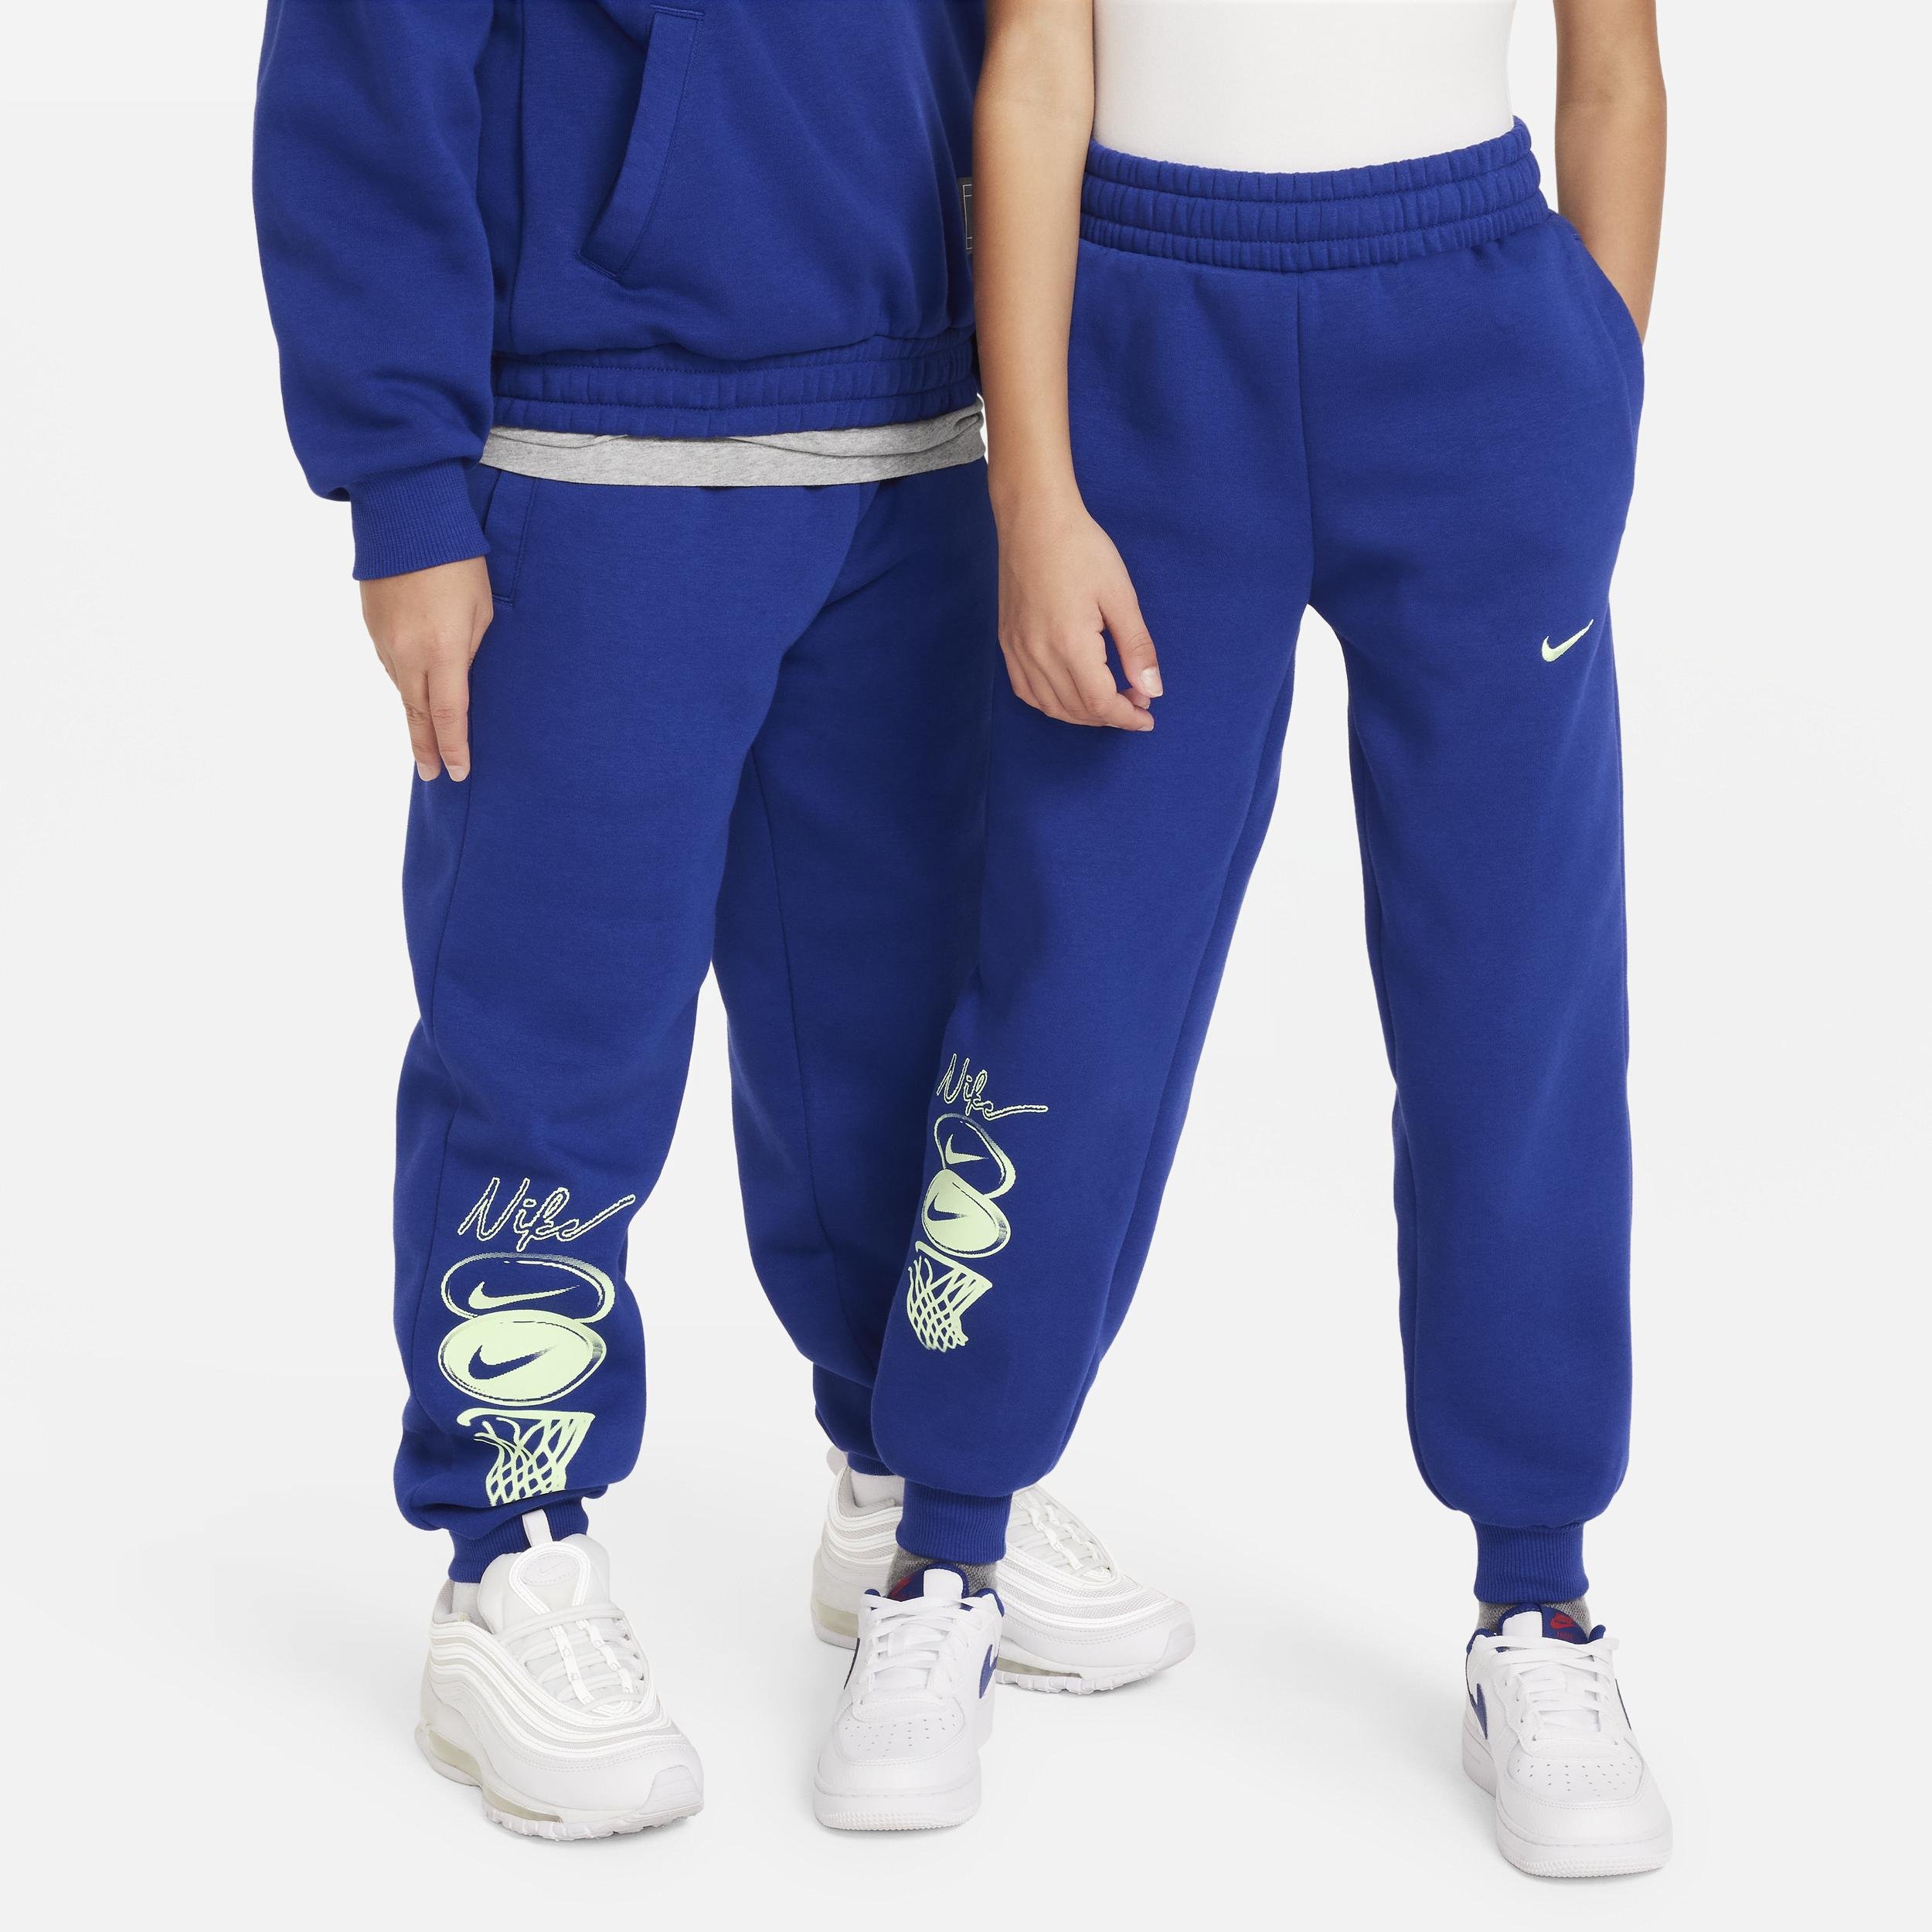 Nike Culture of Basketball Big Kids' Fleece Pants by NIKE